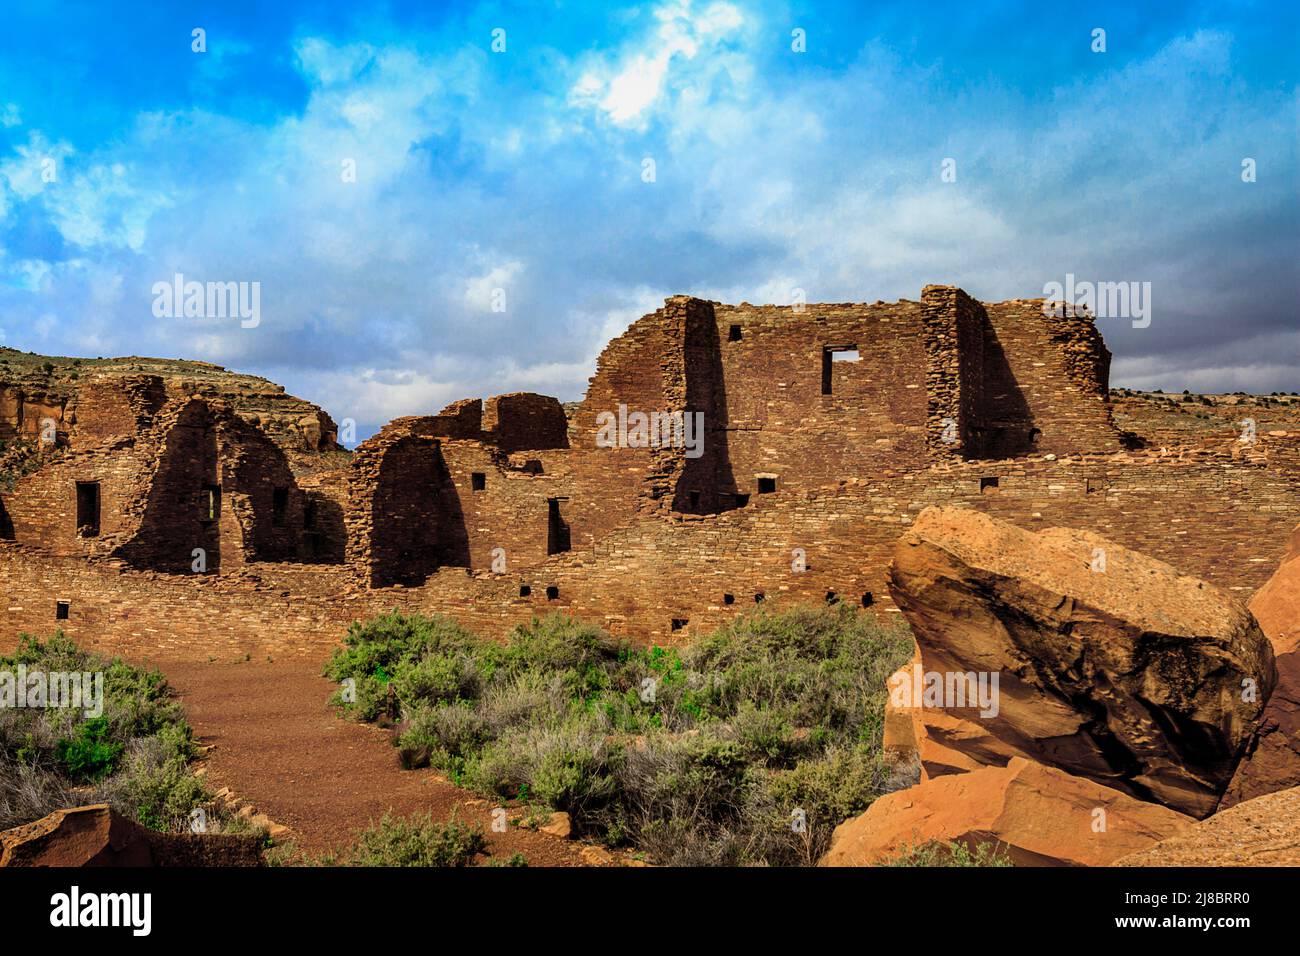 A view of Bonito ruins at Chaco Culture National Historical Park. Stock Photo